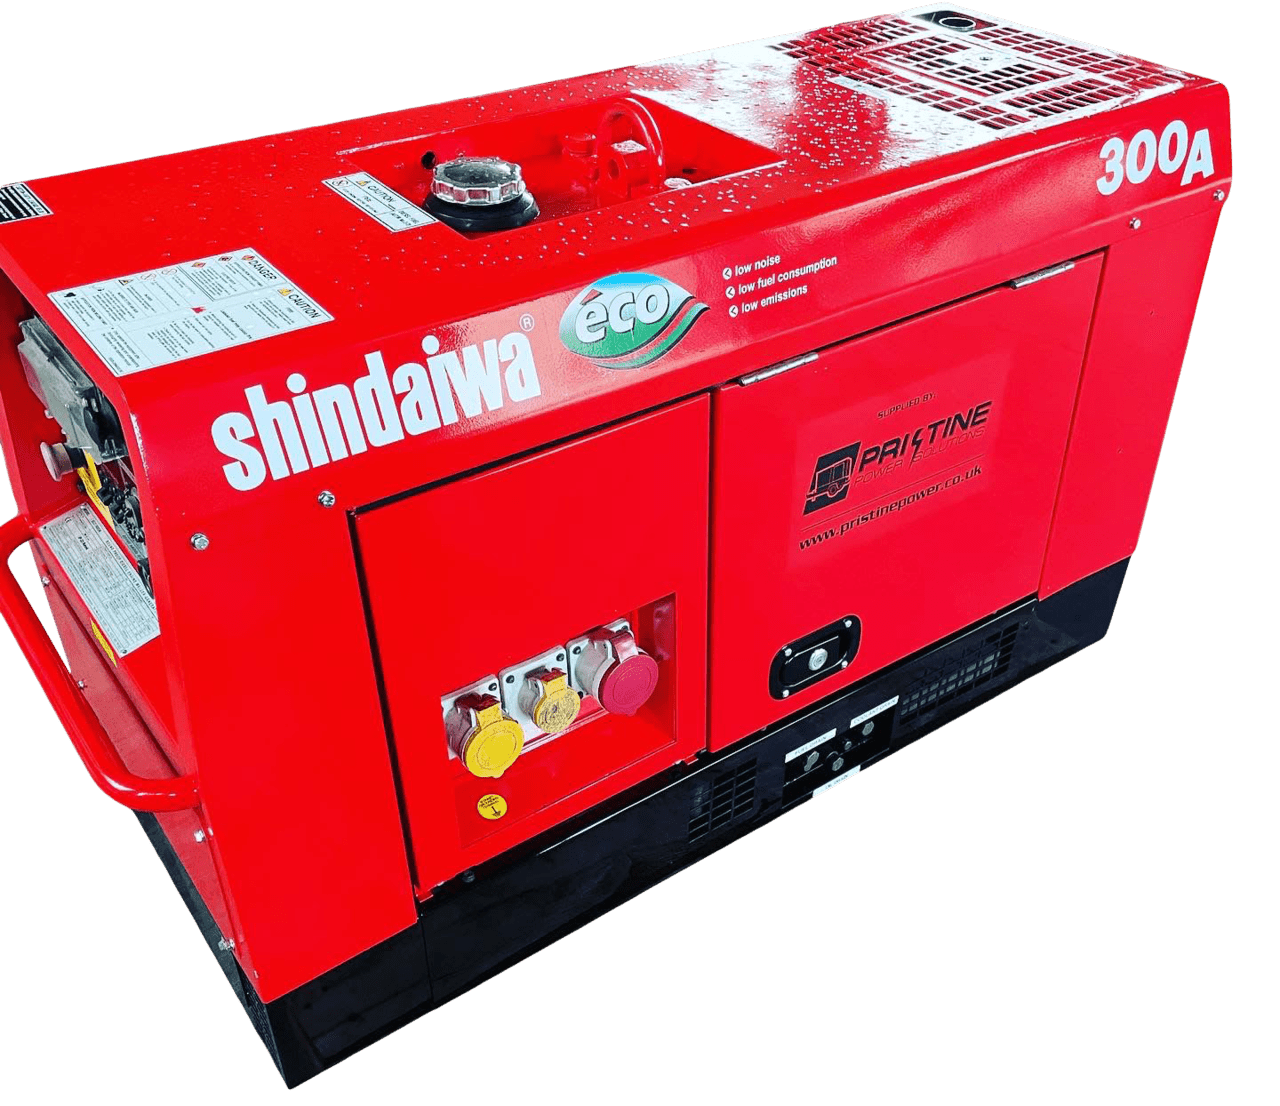 A red shindaiwa generator on a white background